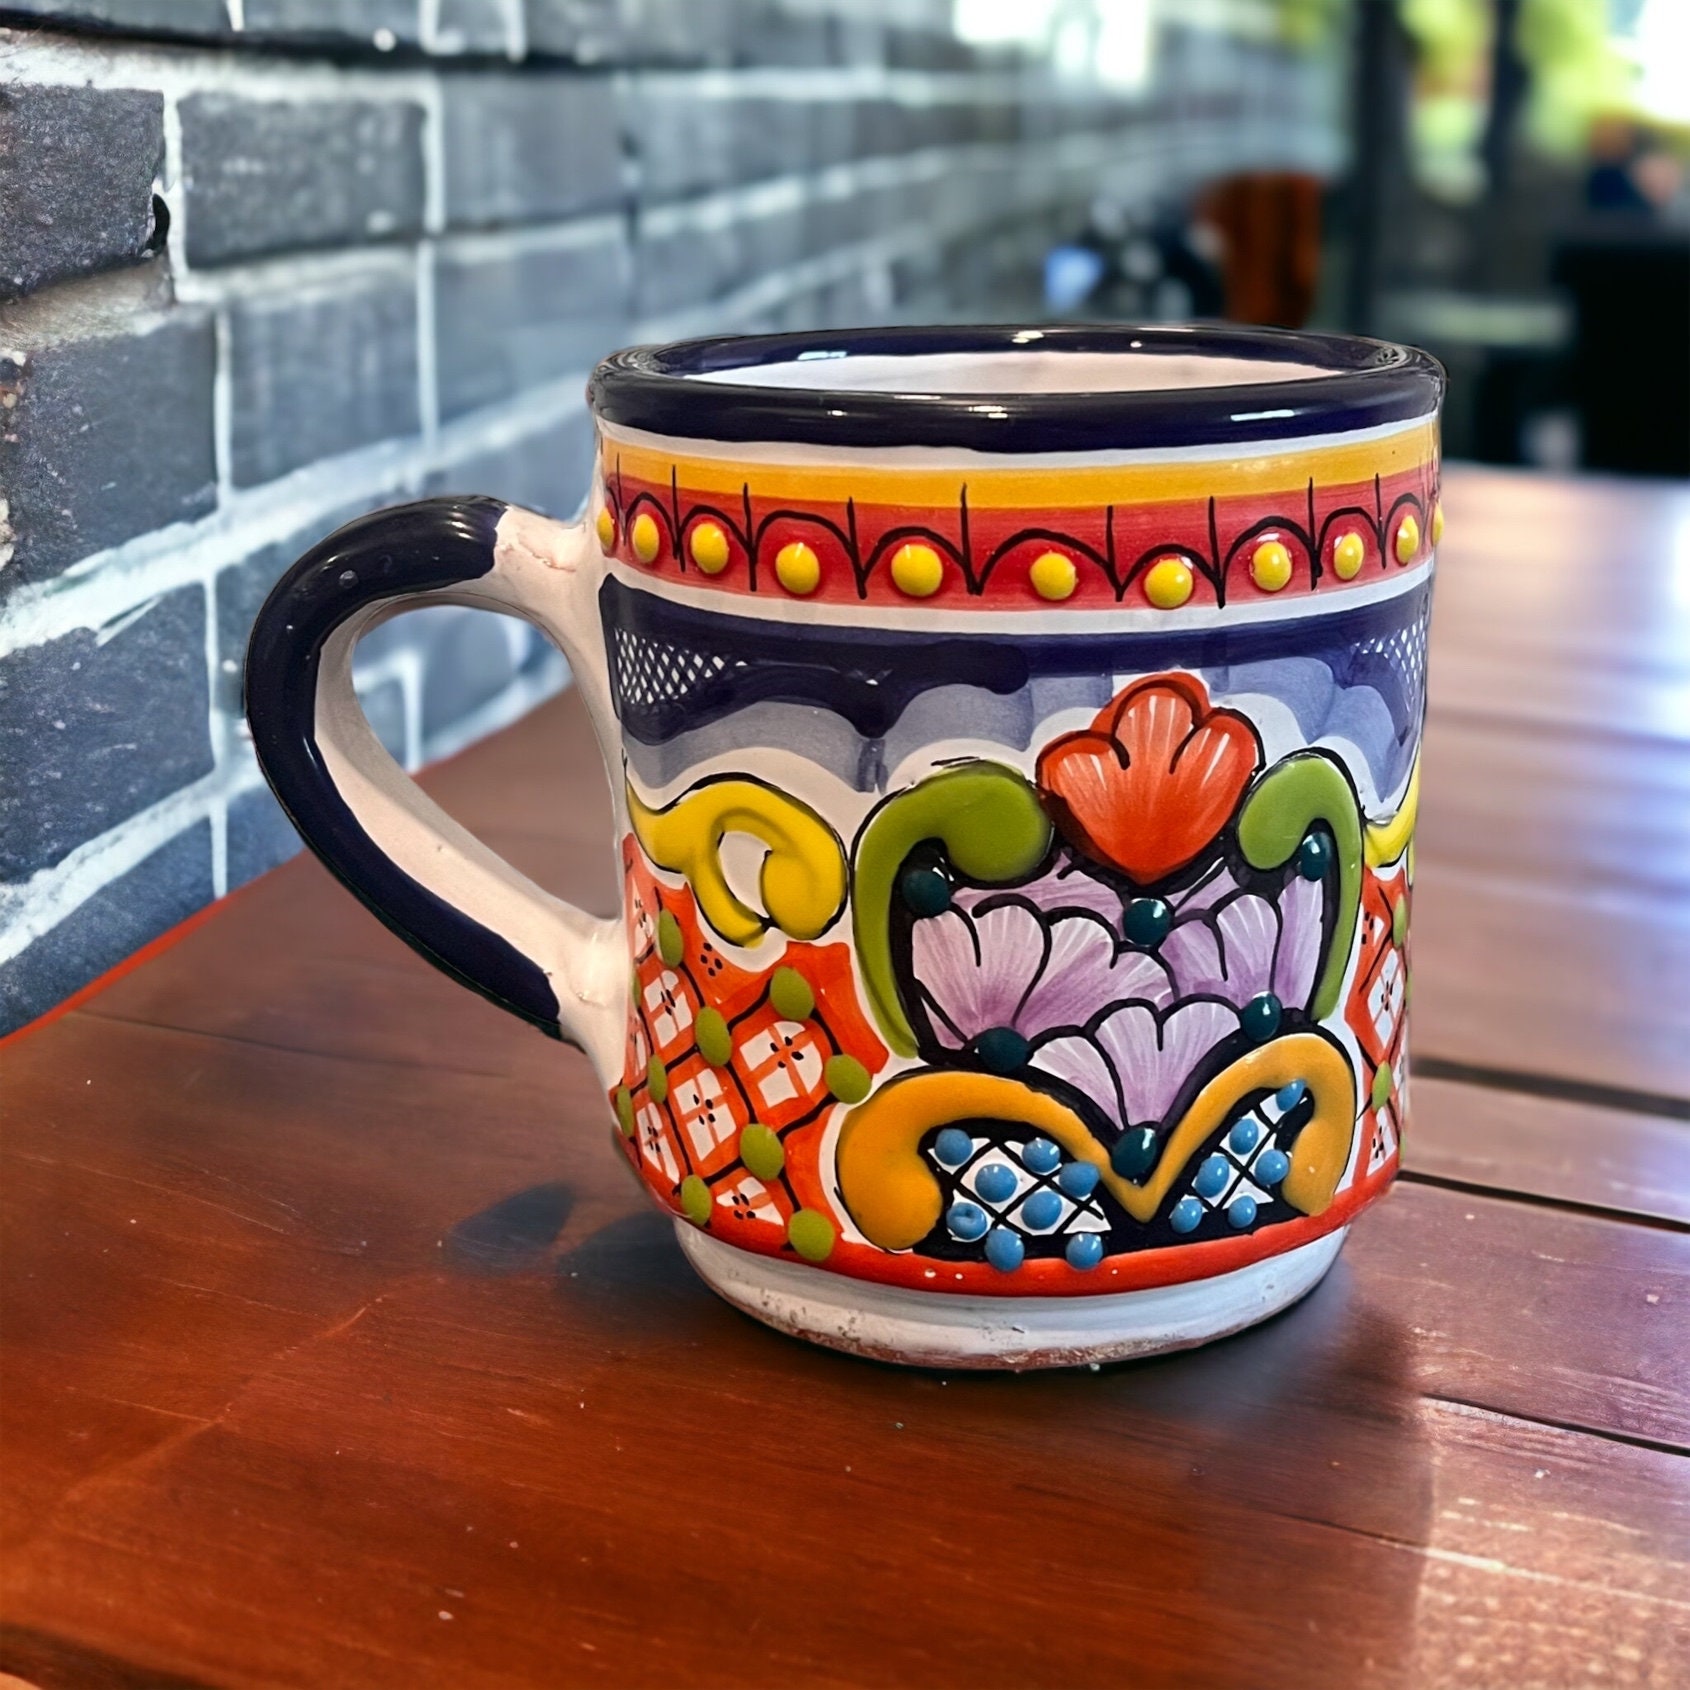 Feliz navidad Coffee Mugs, 15oz for Mexican family or Latin friend